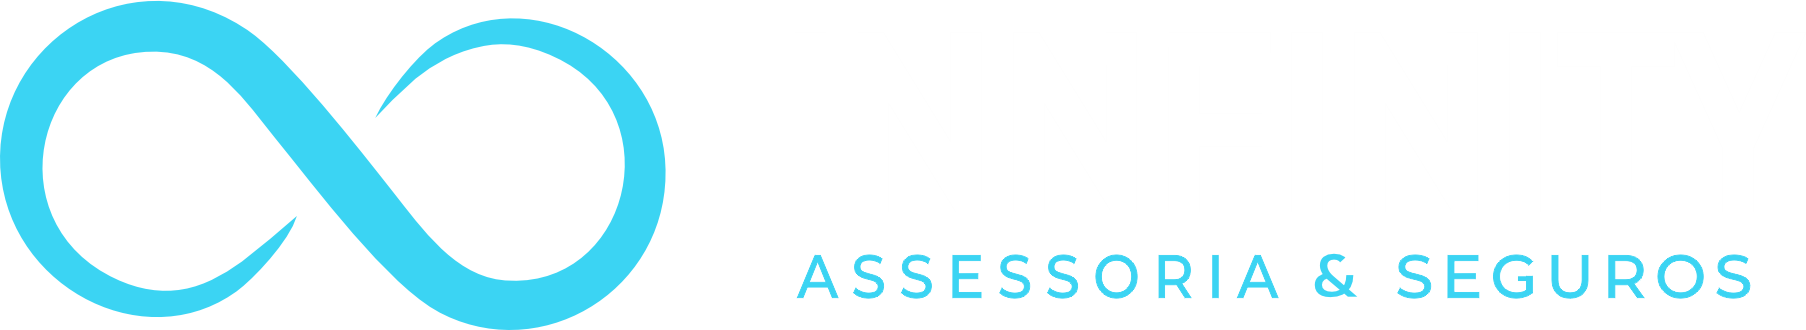 innfinity assessoria